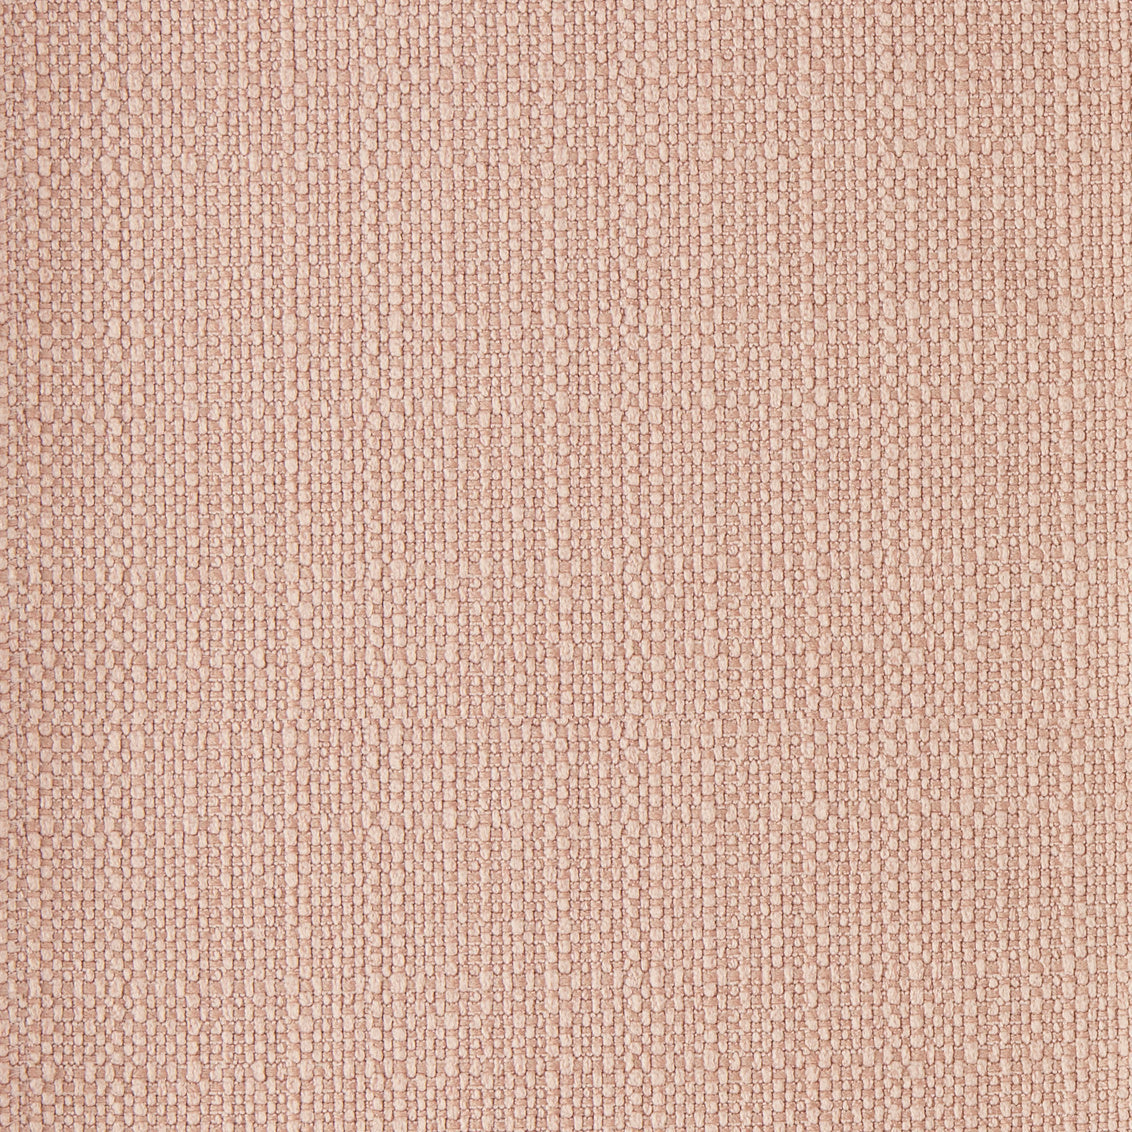 Klein : Loose Woven Larger Texture Linen